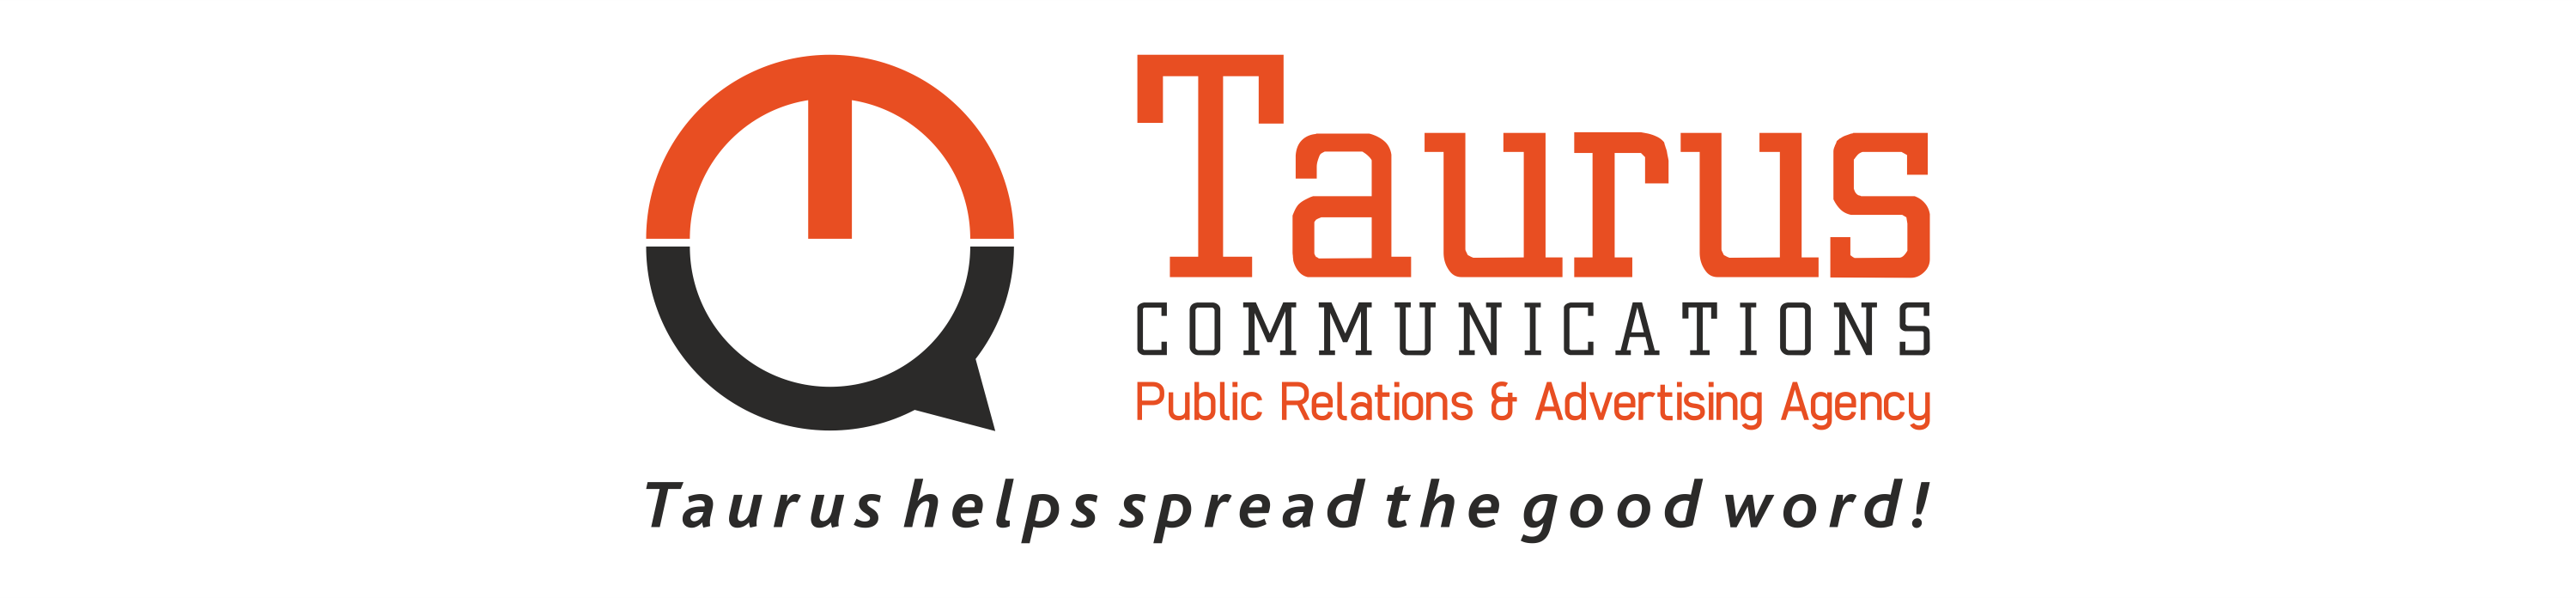 Taurus Communications